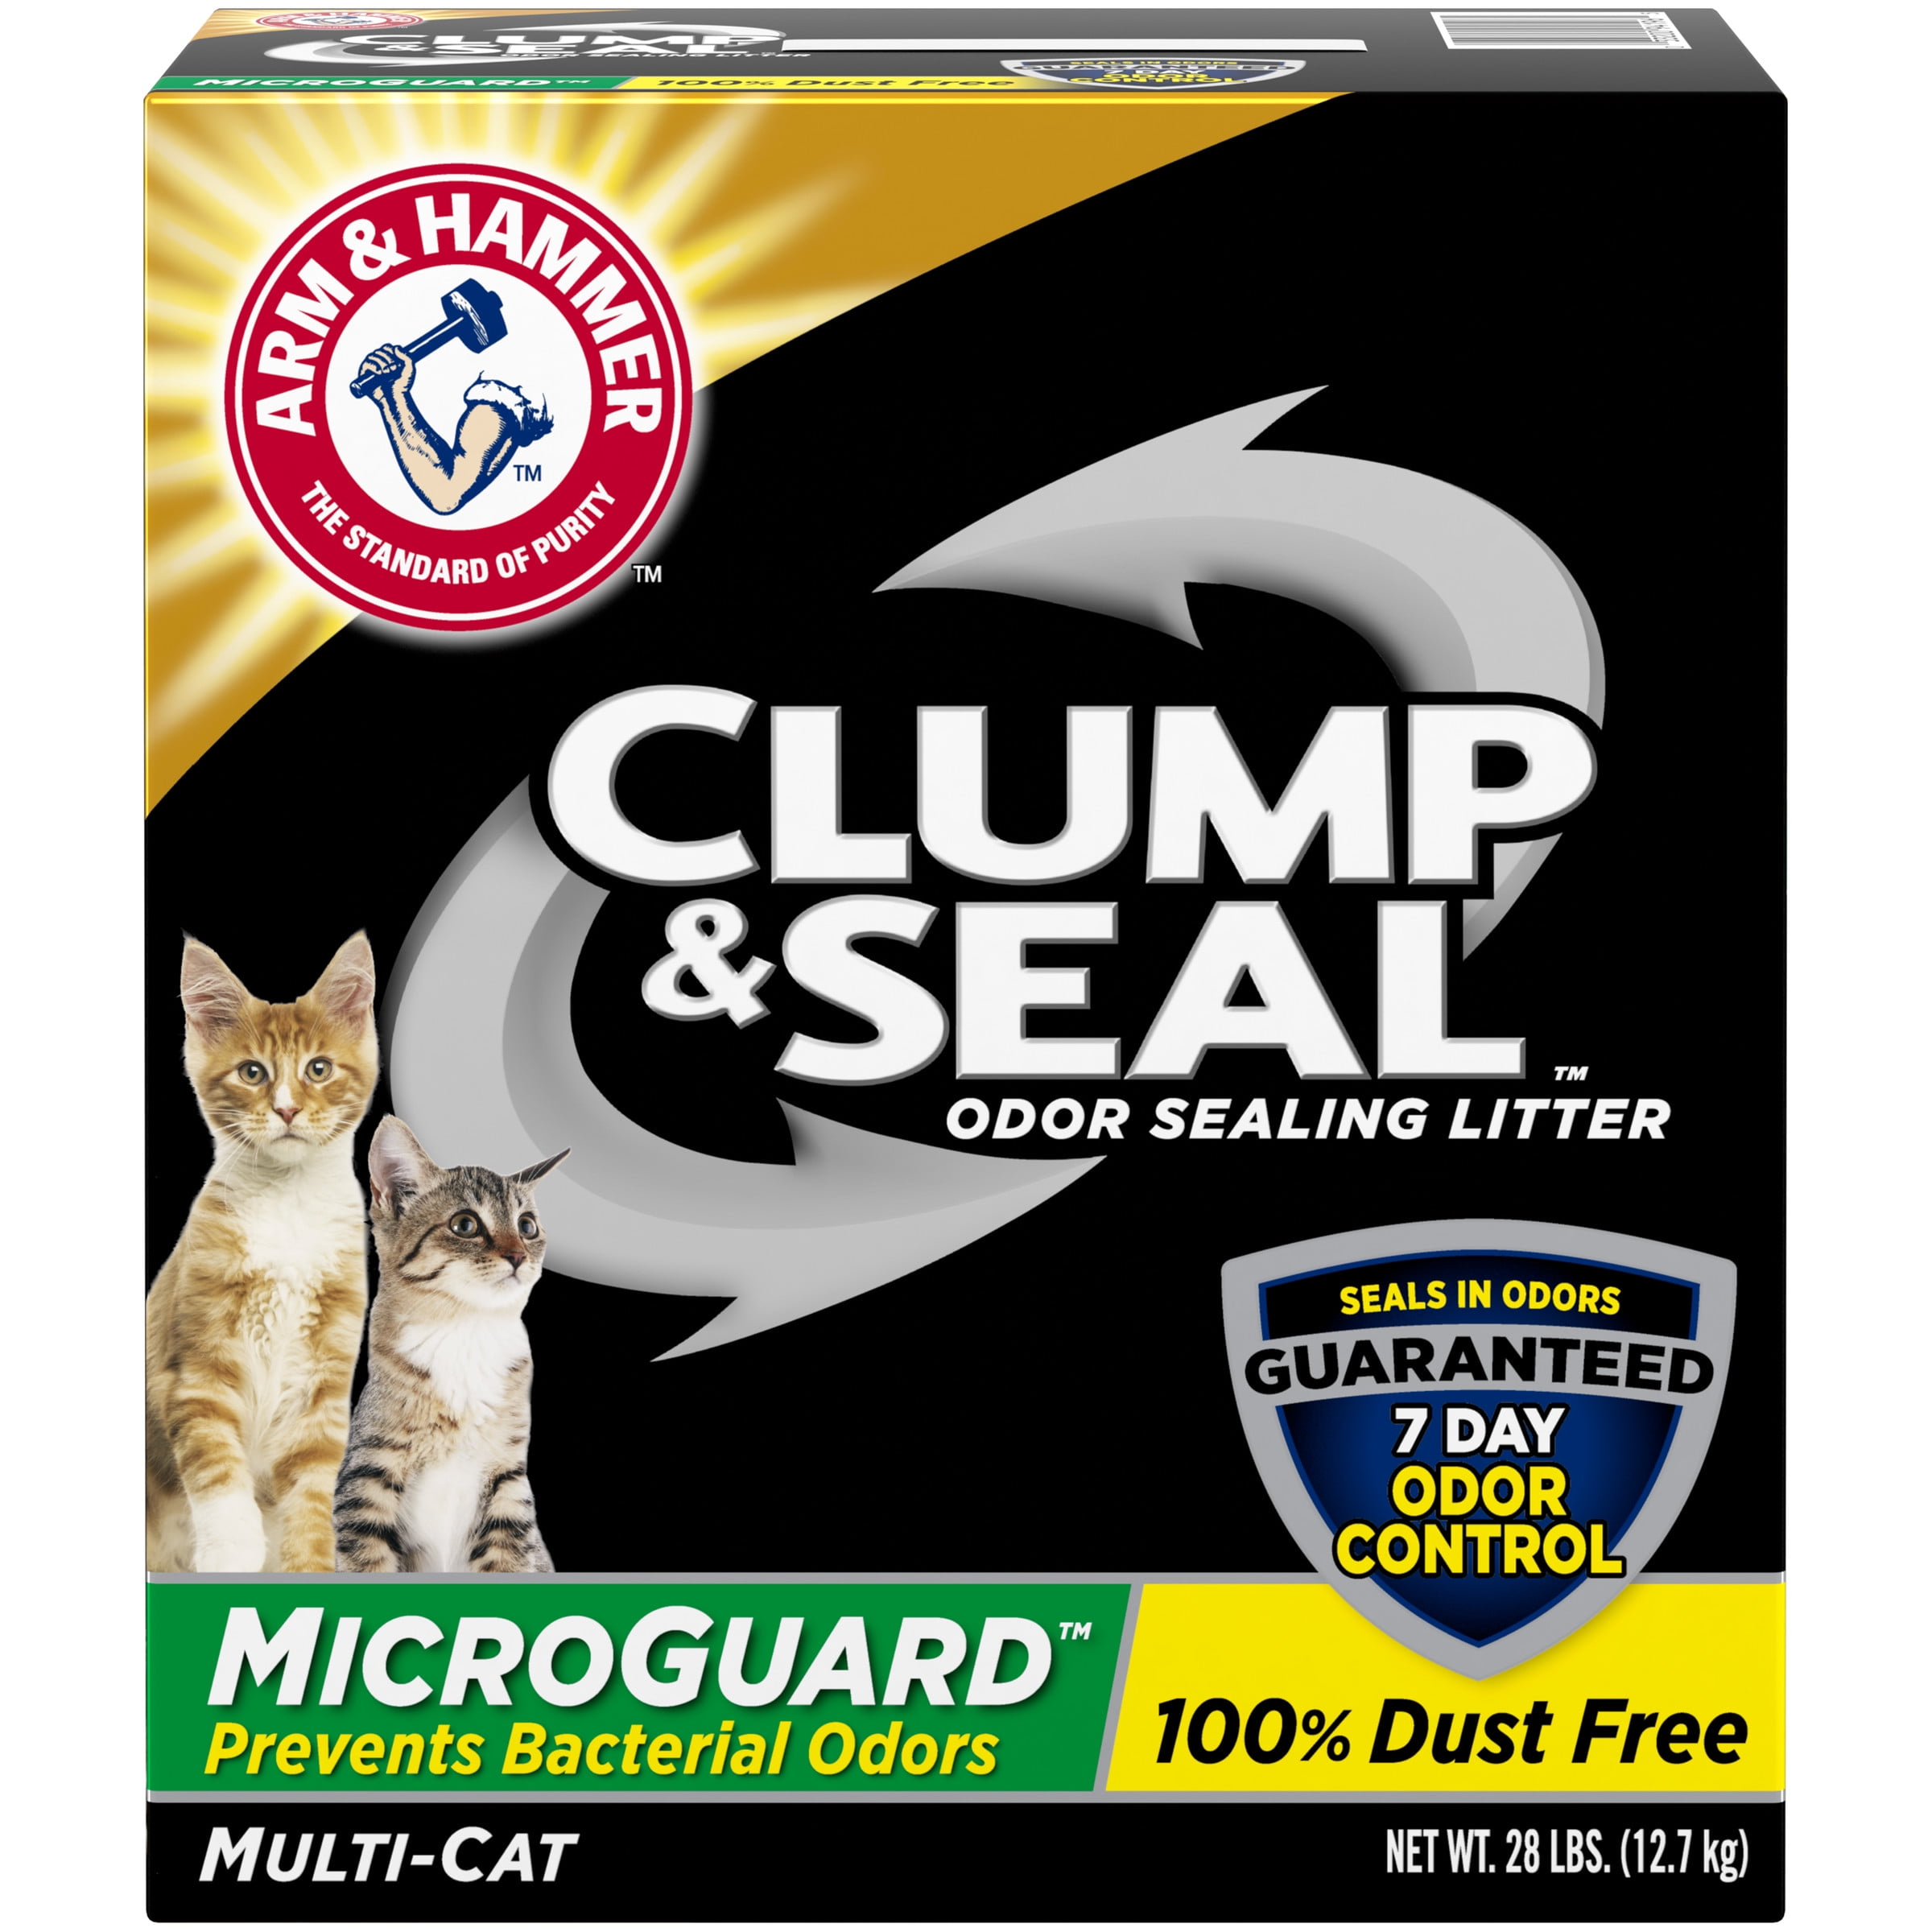 arm-hammer-clump-seal-microguard-cat-litter-28lb-walmart